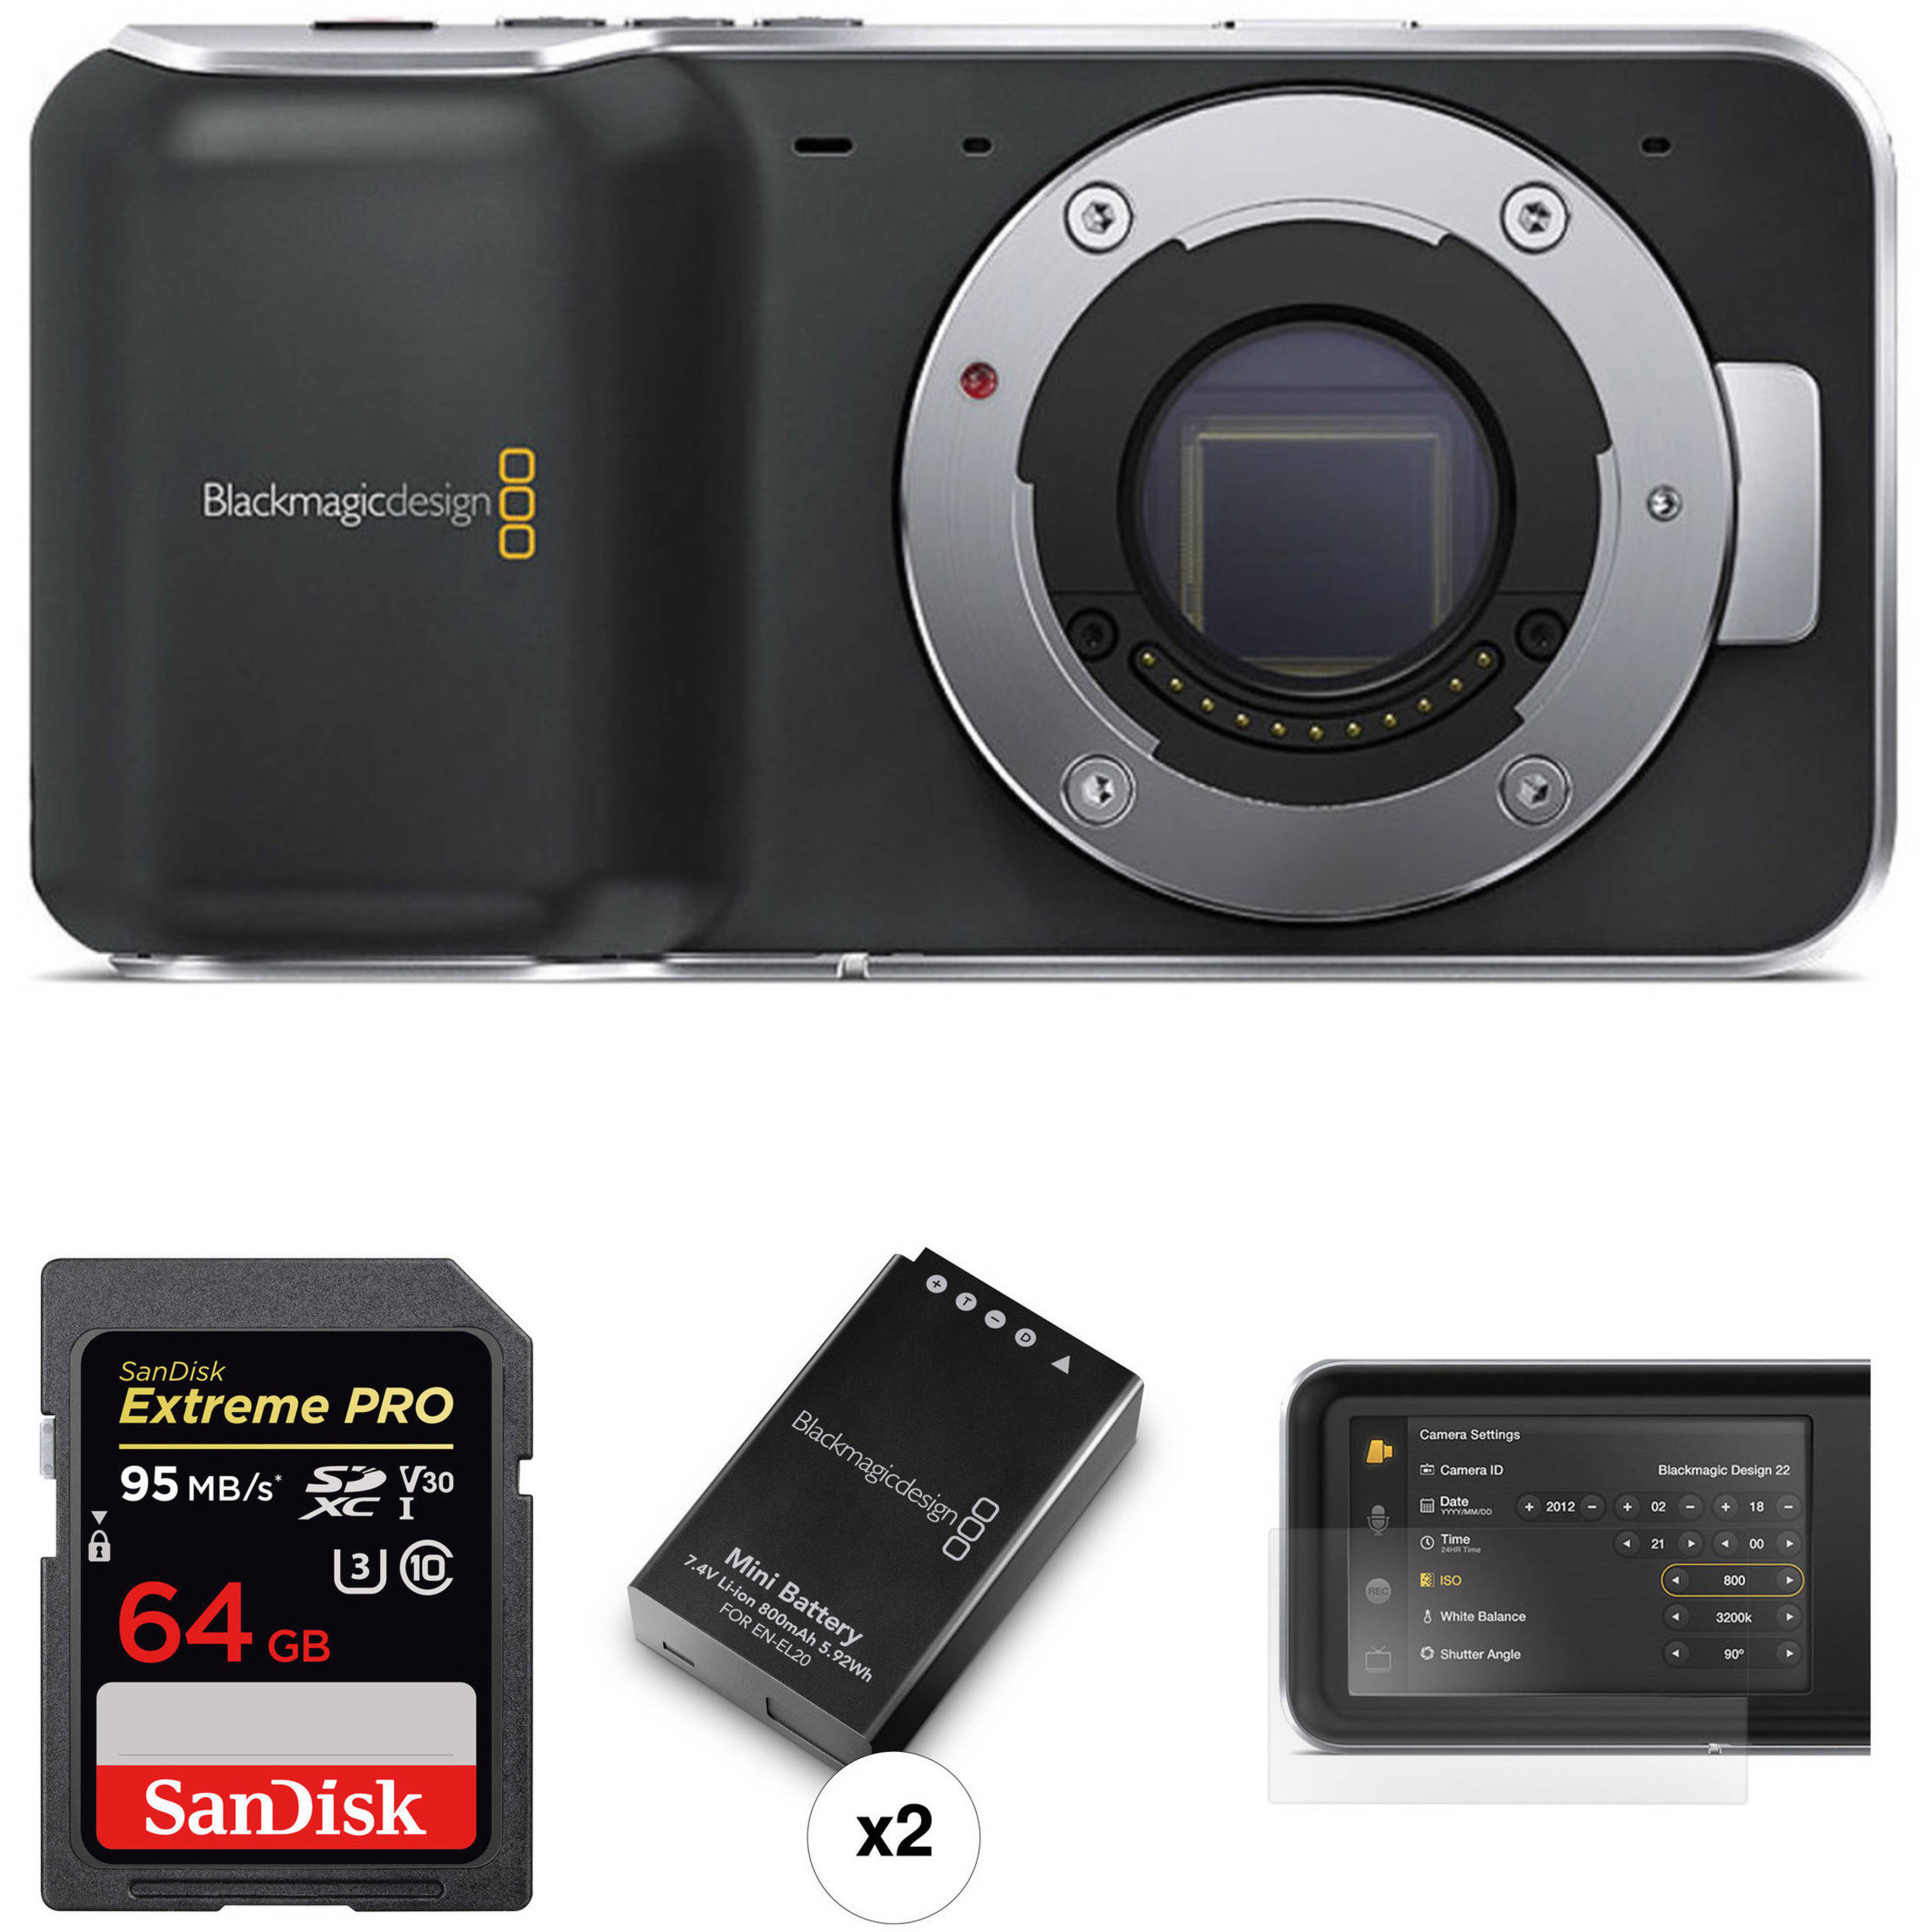 Blackmagic Design Pocket Cinema Camera Kit B&H Photo Video